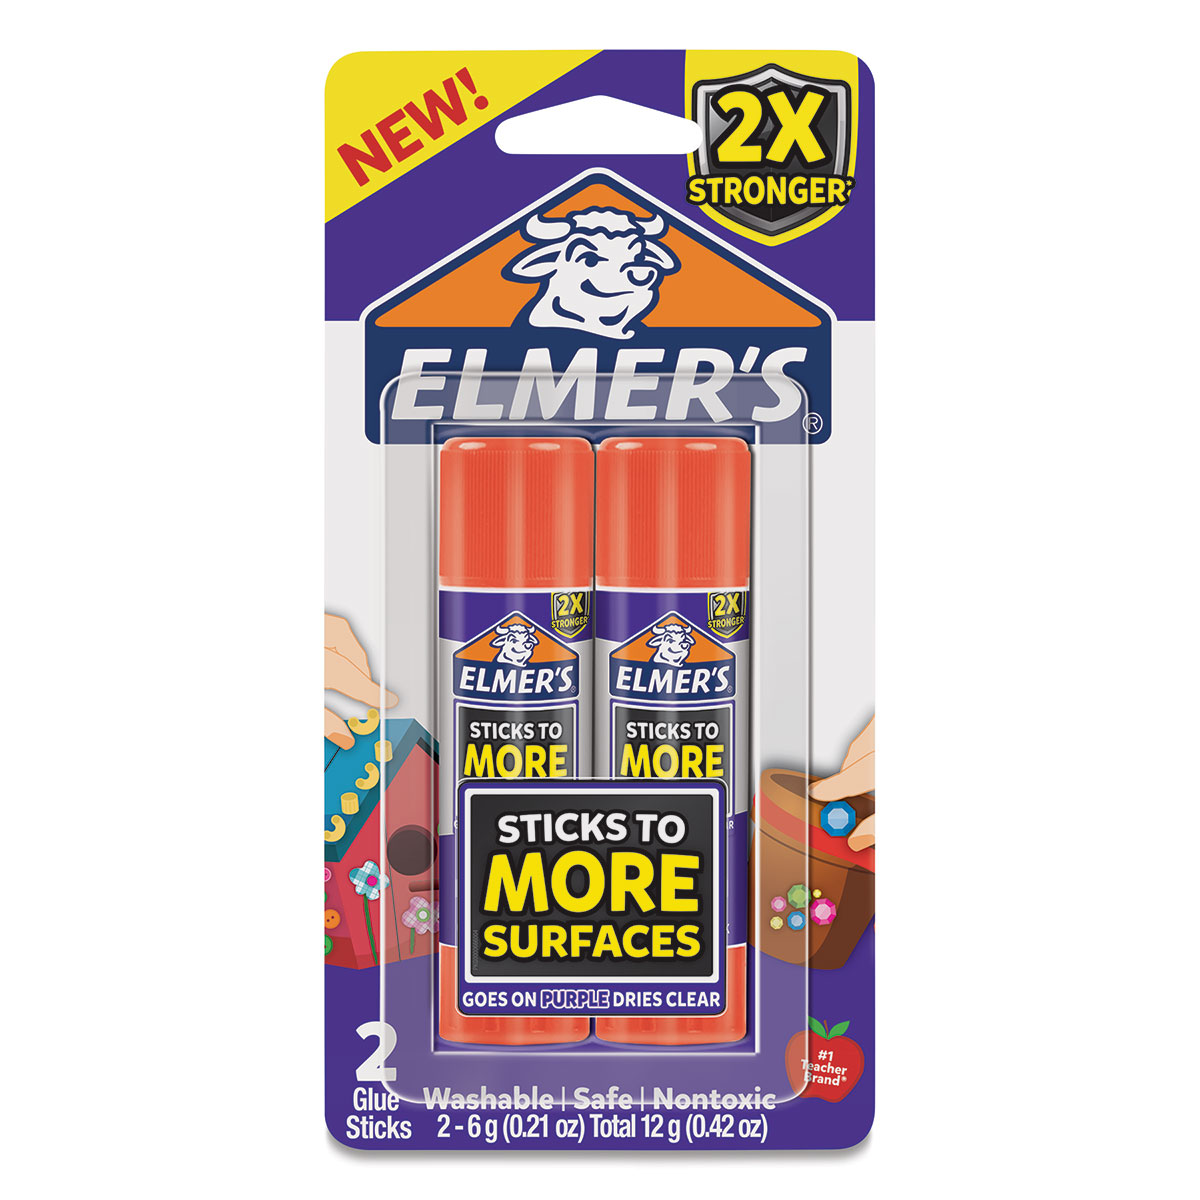 48 pack of Elmers Glue Sticks In Bulk